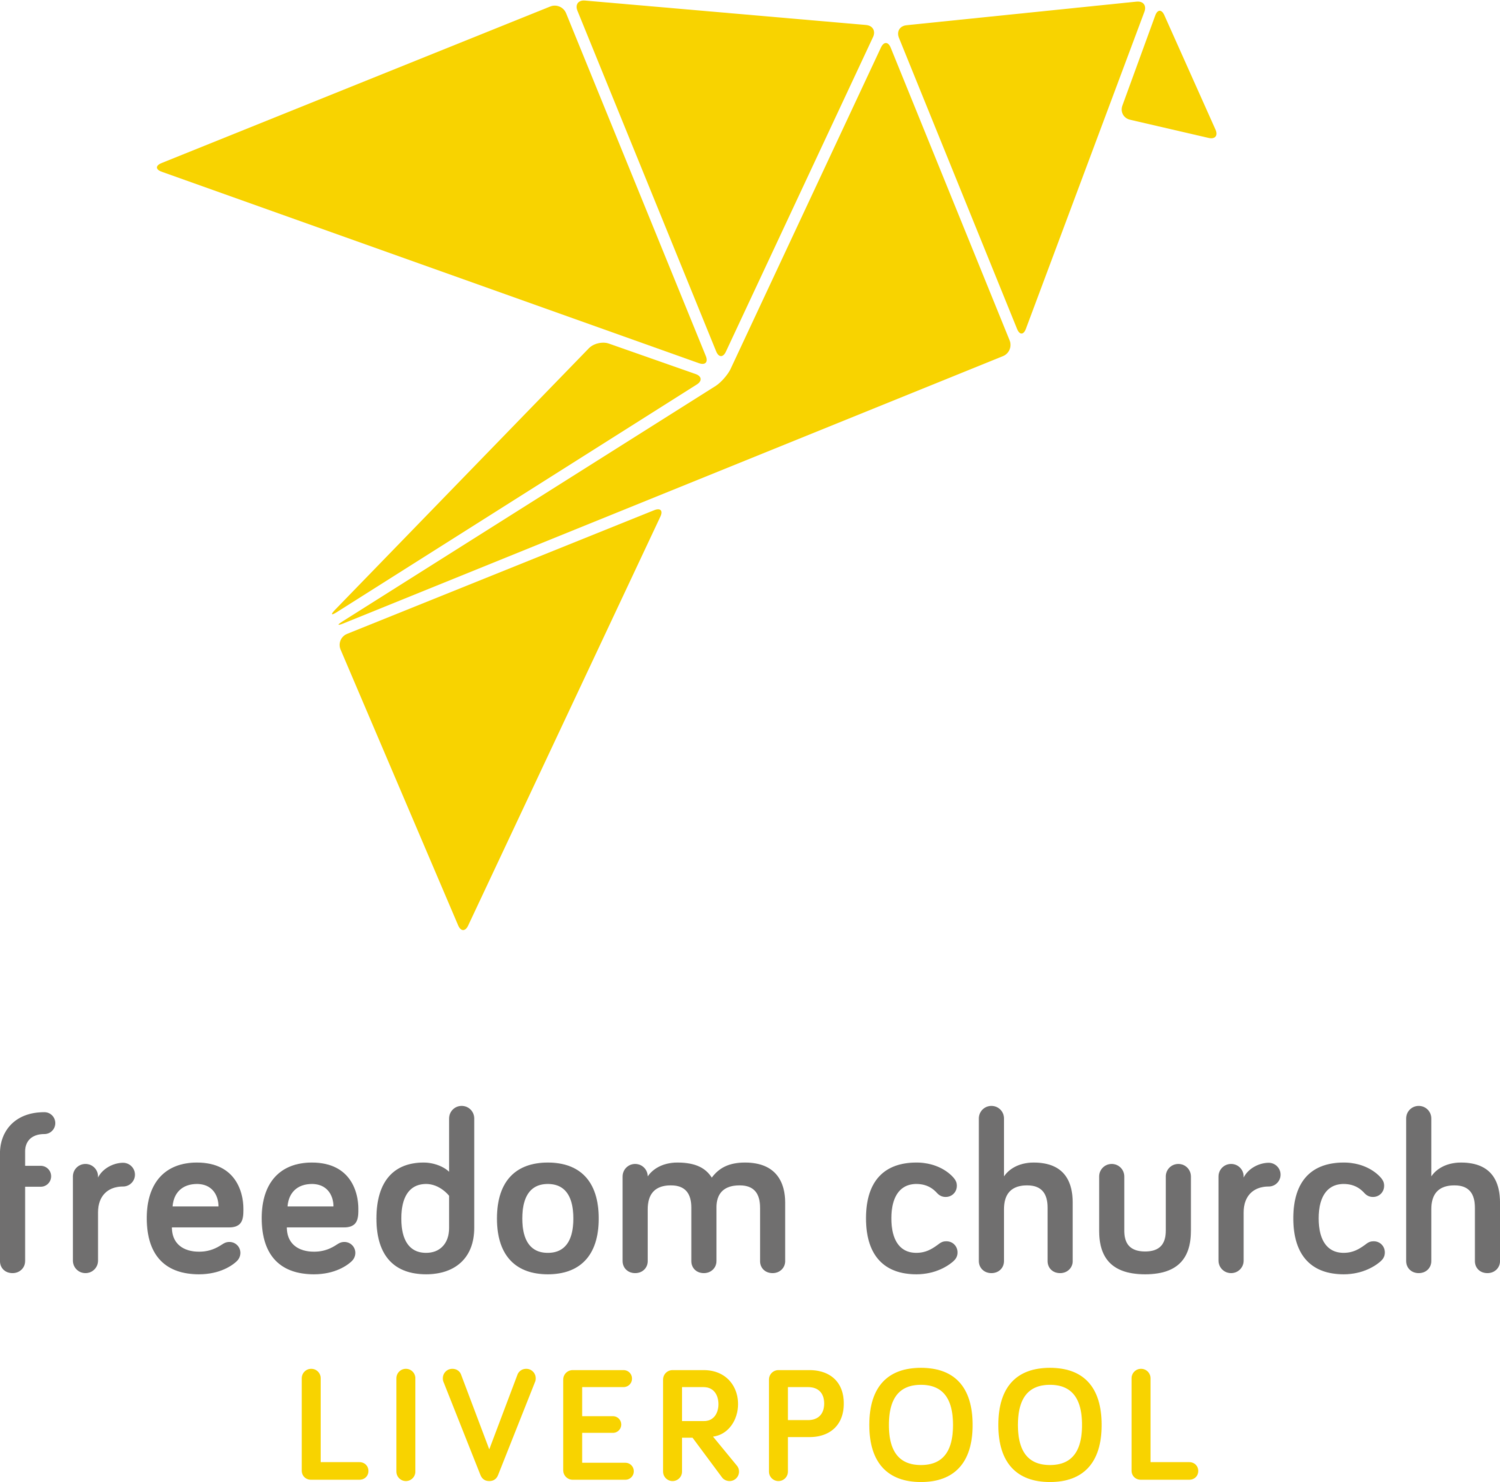 Freedom Church Liverpool